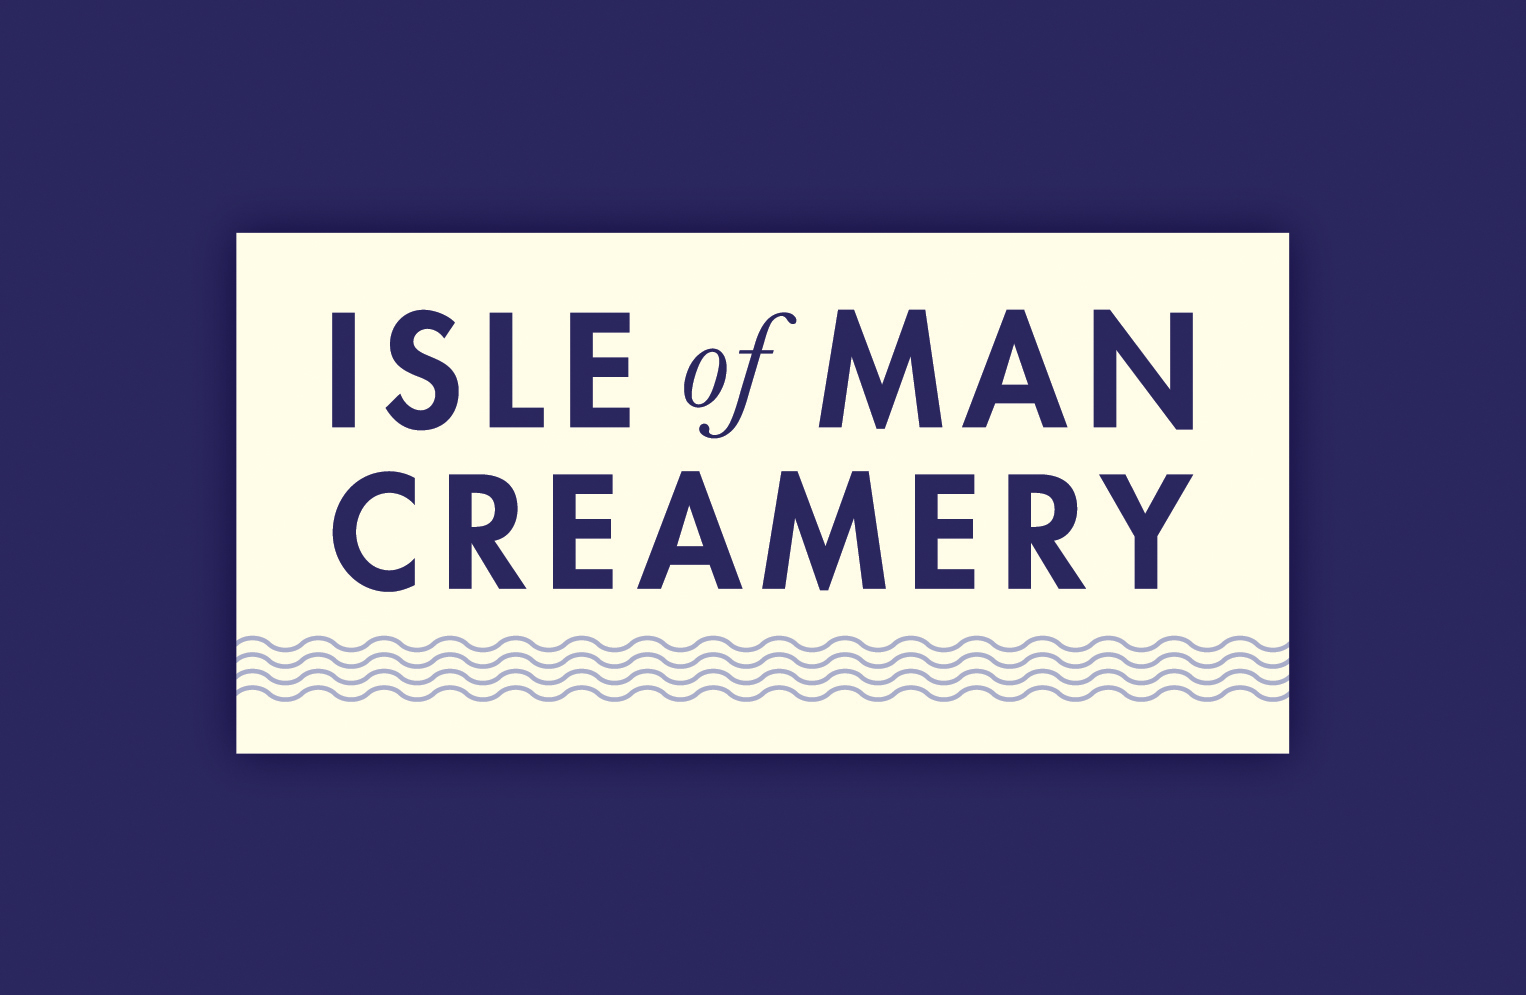 Isle of Man Creamery Logo